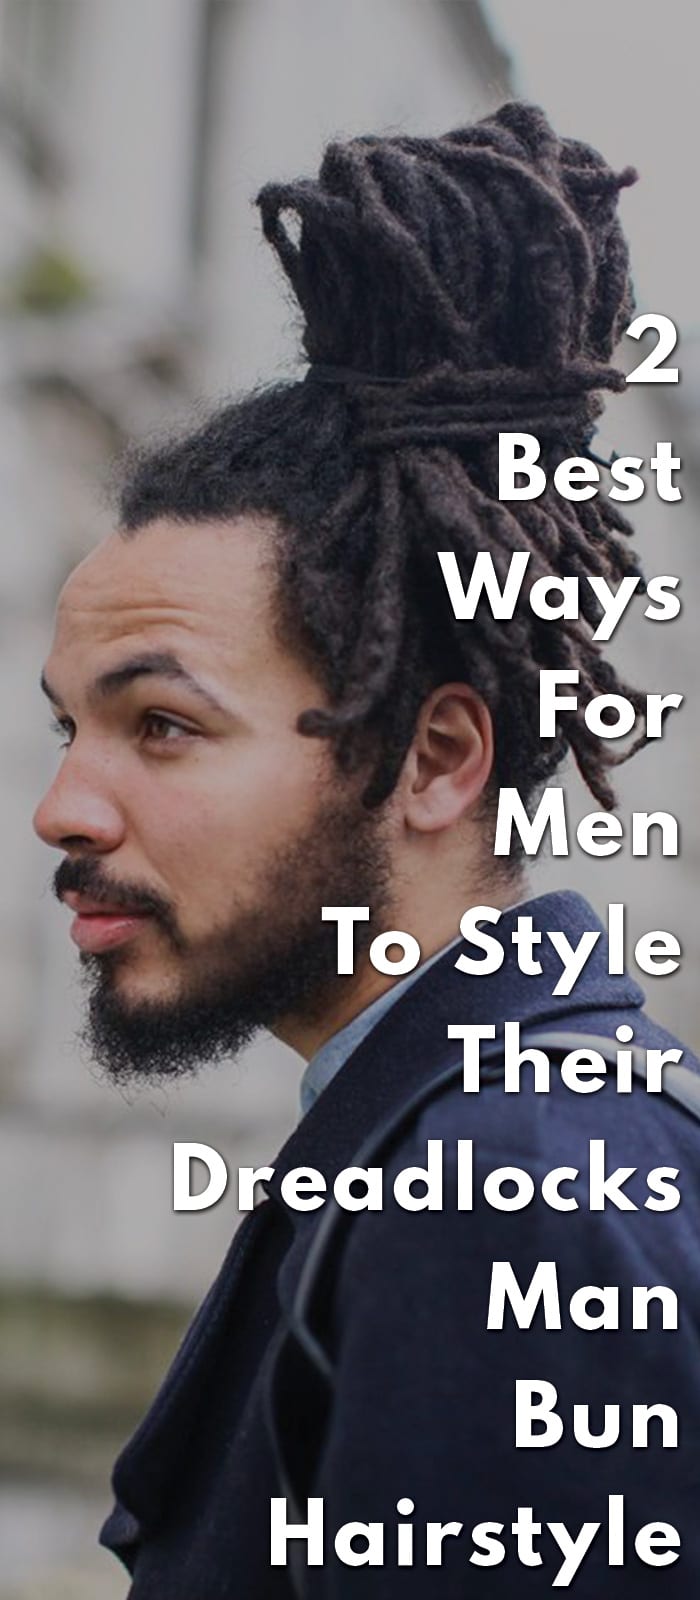 2 Best Ways For Men To Style Their Dreadlocks Man Bun Hairstyle